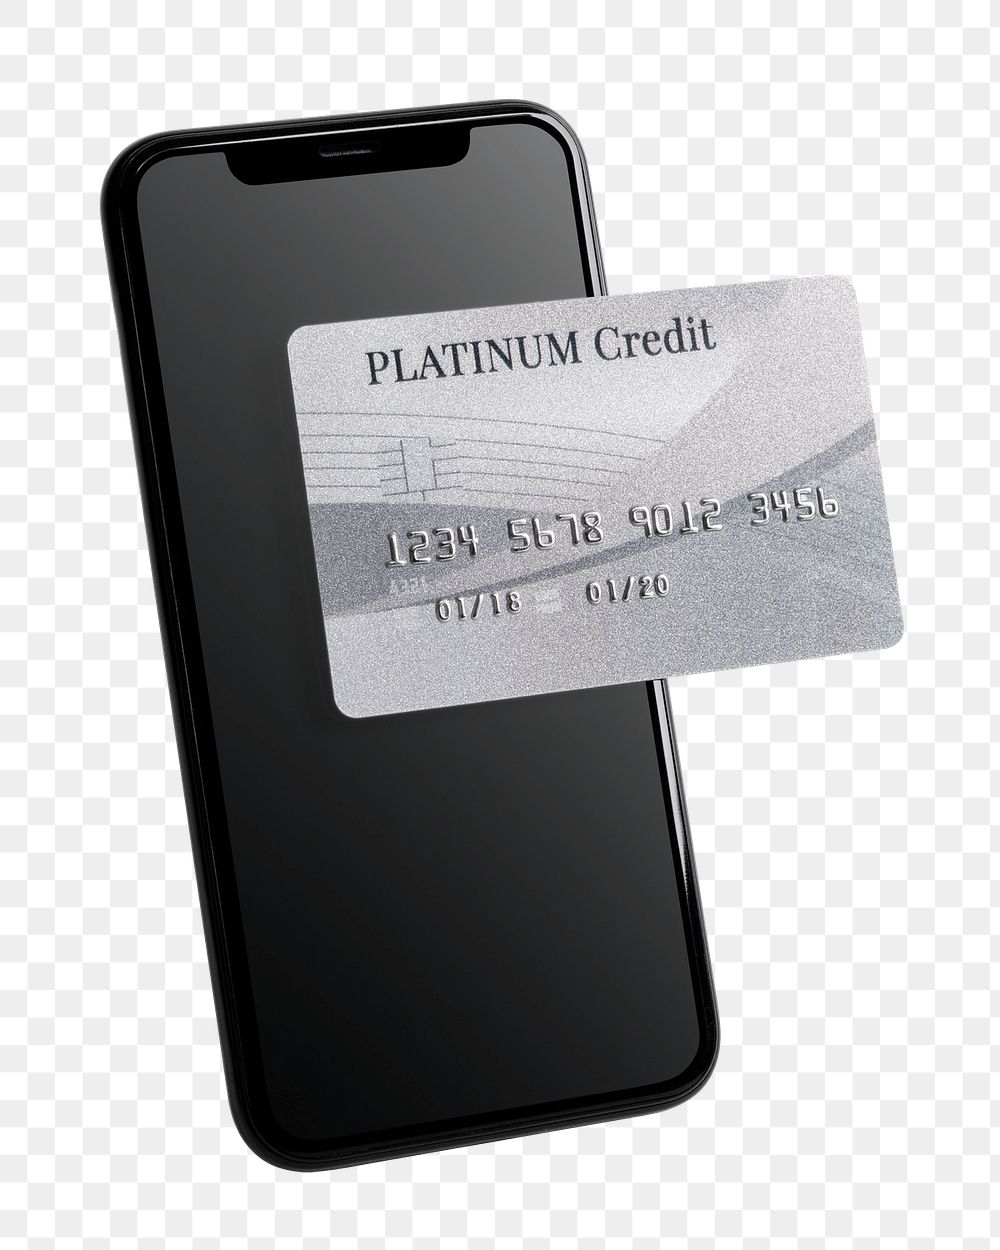 Platinum credit card mockup png mobile banking